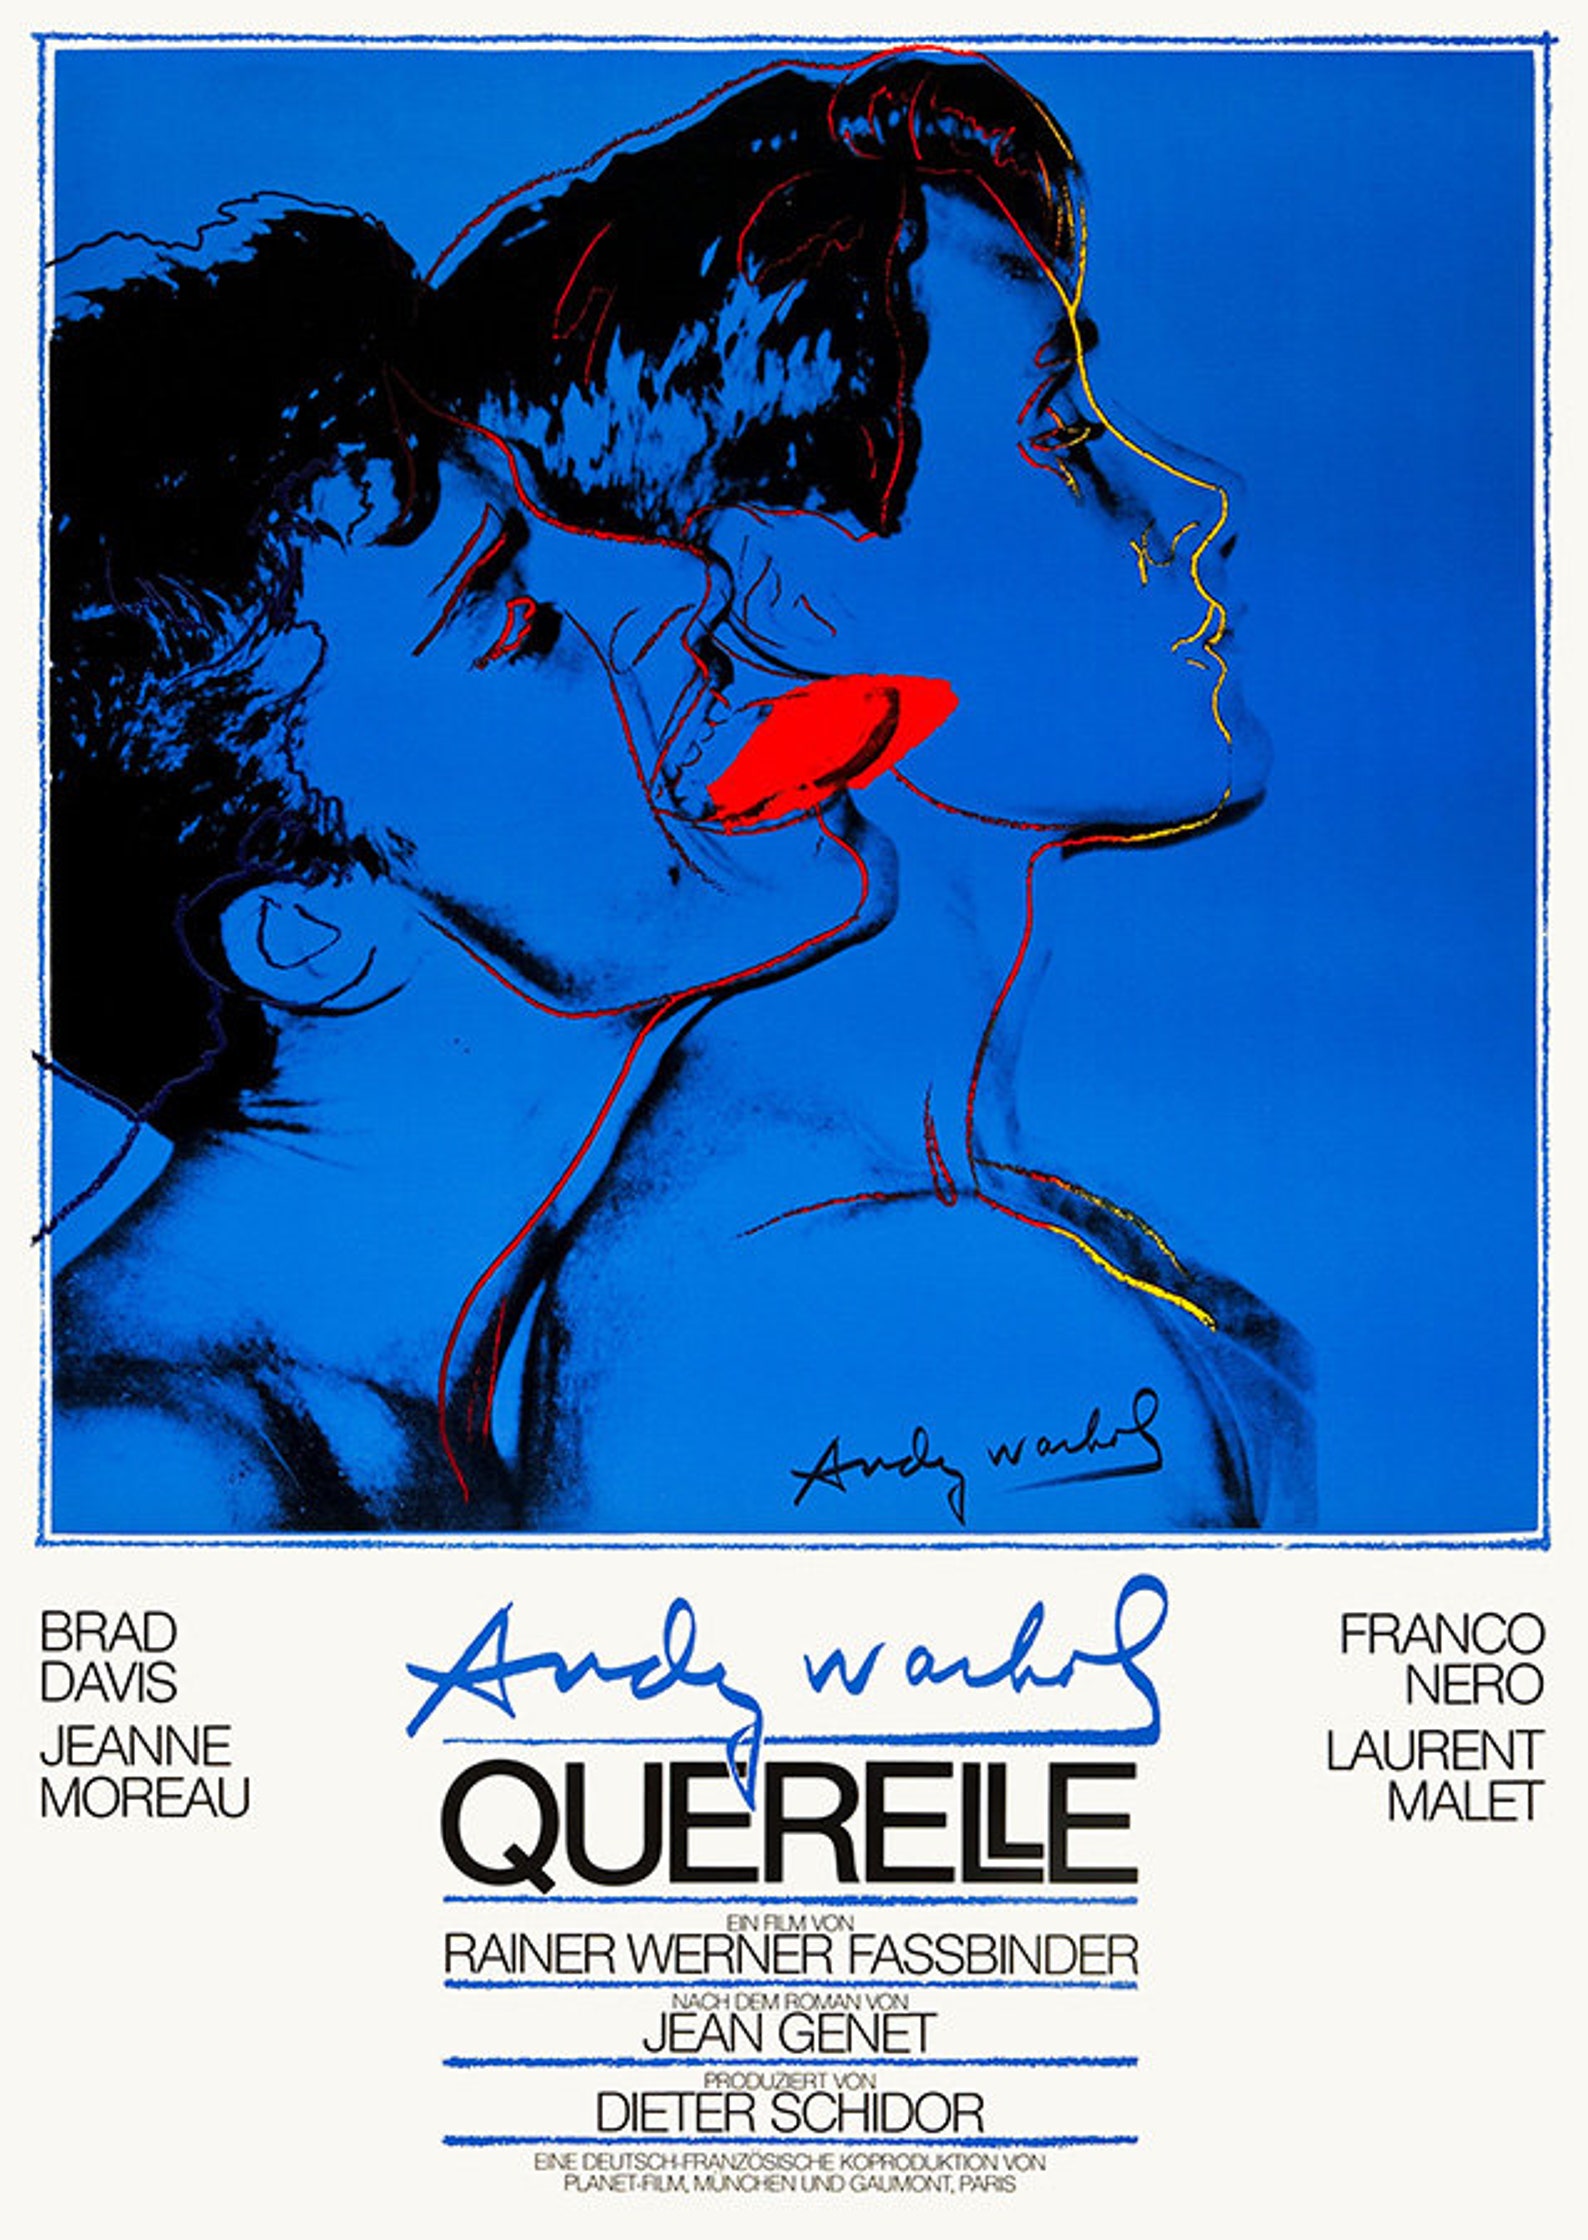 CLASSIC MOVIE POSTER Querelle Fassbinder Cinema | Etsy